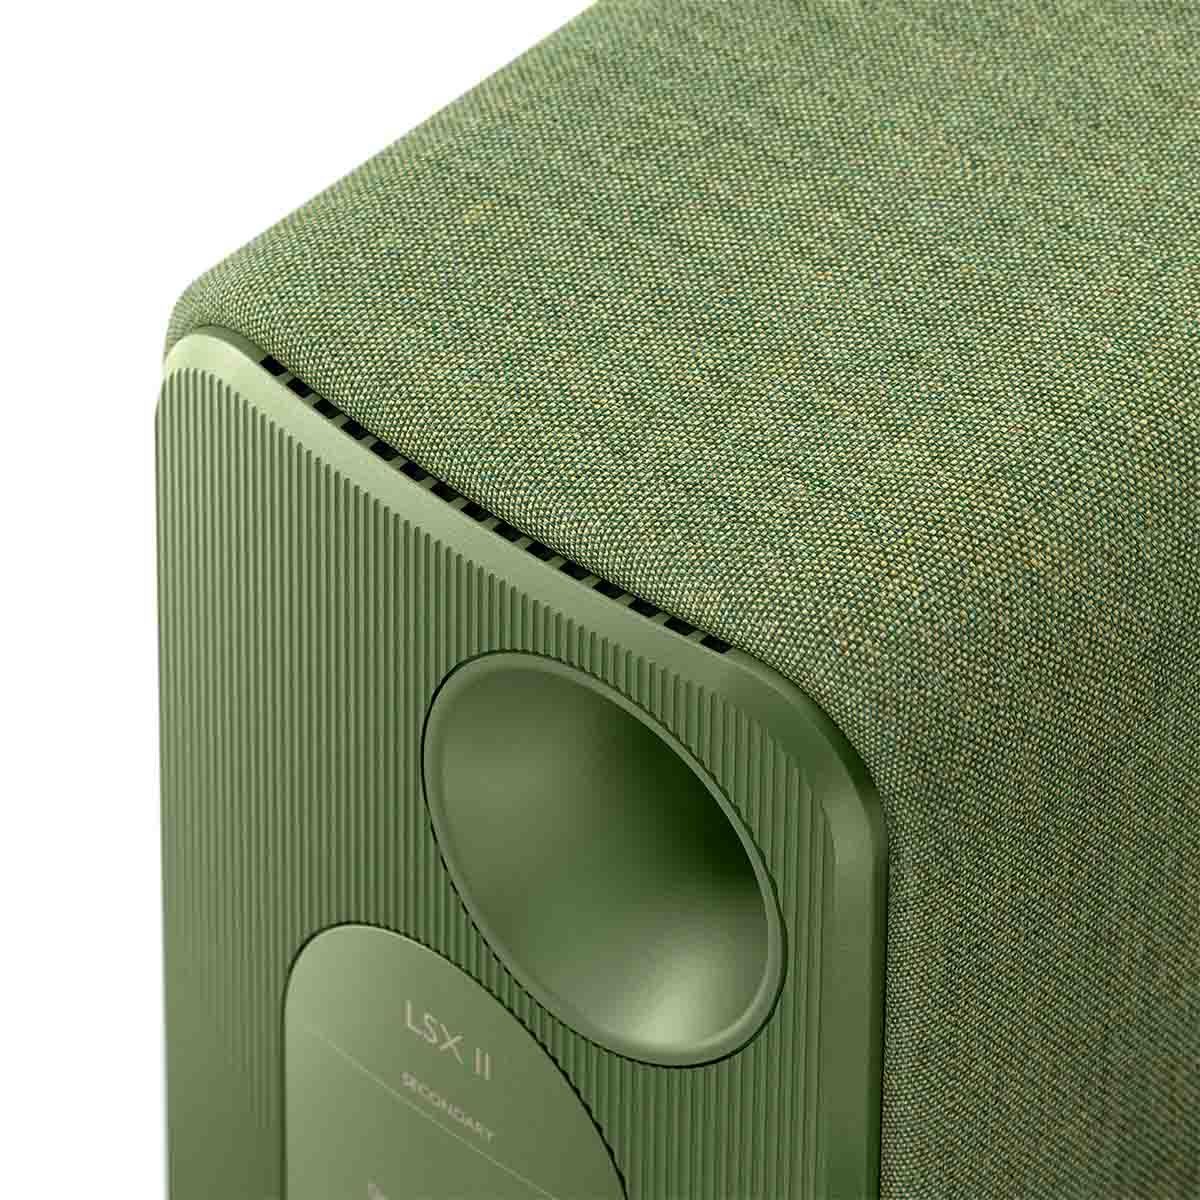 KEF LSX II Wireless HiFi Speakers - Olive Green - close-up of rear port